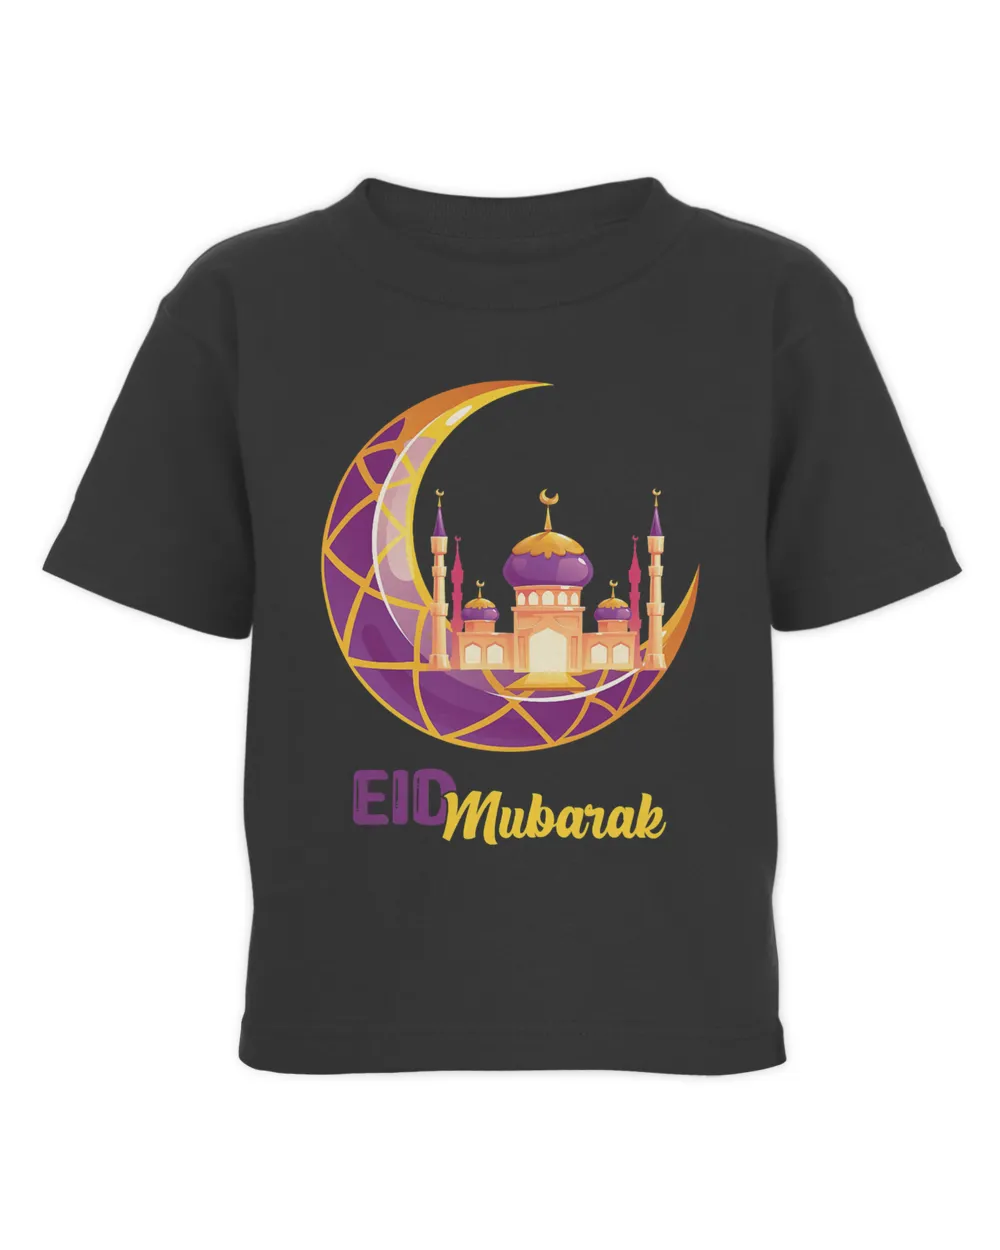 Eid Mubarak Eid Al Fitr Islamic Holidays Muslim Happy Eid T-Shirt